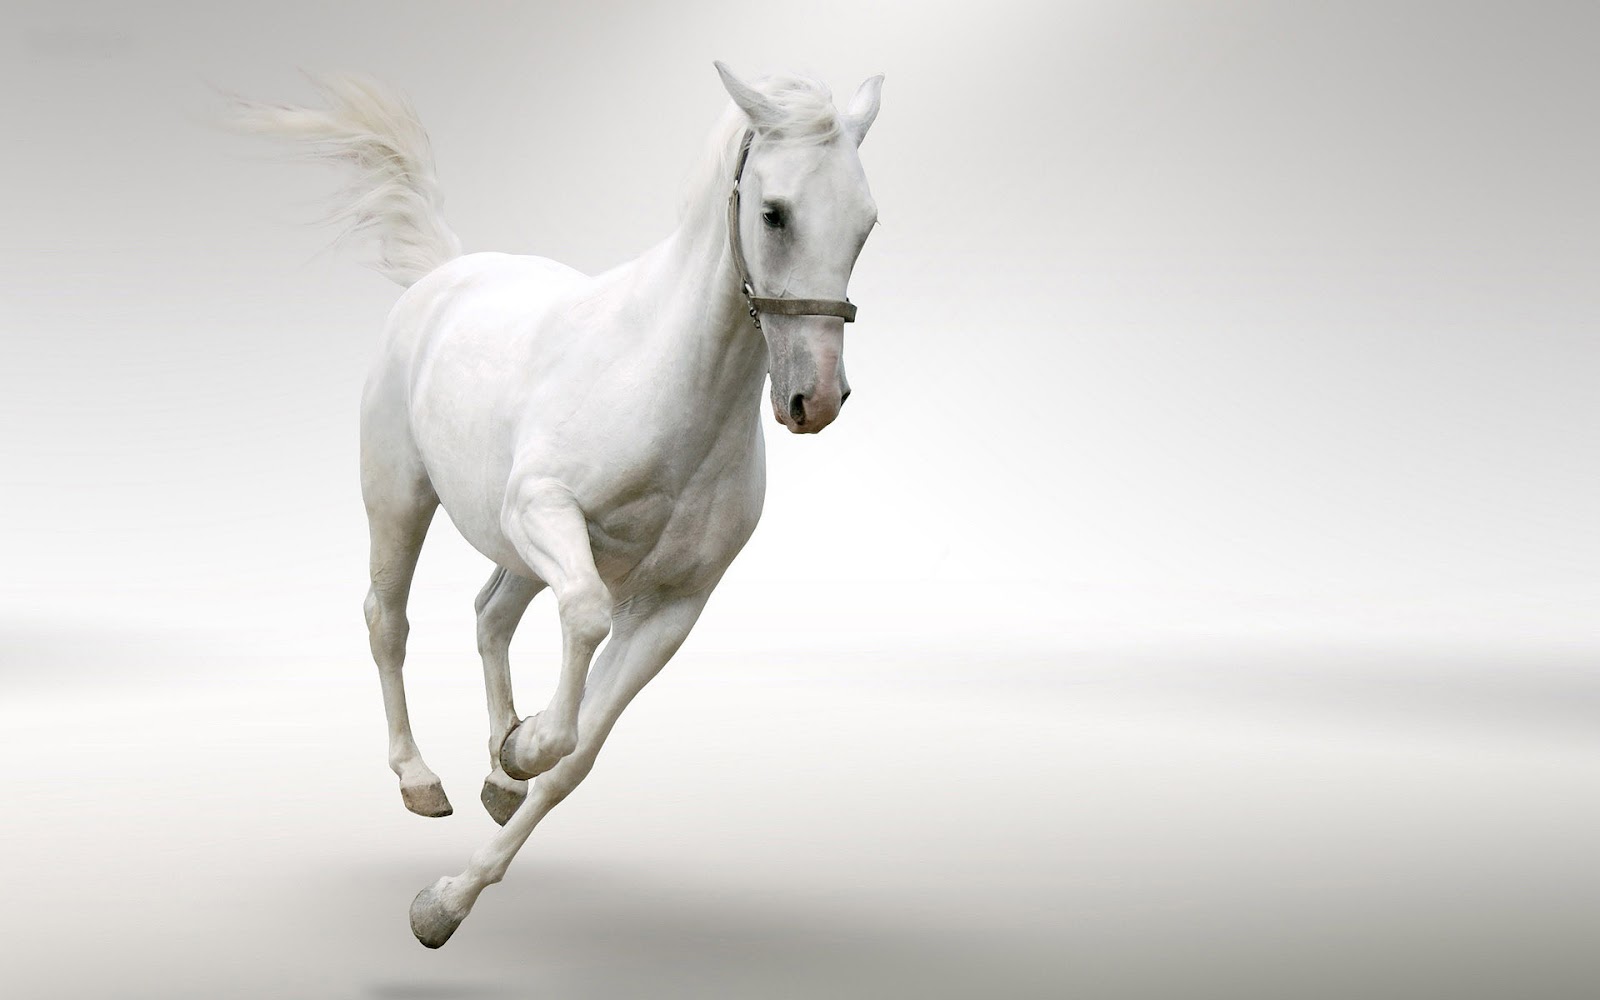 http://1.bp.blogspot.com/-zpsopJ3AsPY/UDewUCj3gsI/AAAAAAAAA_A/ew8zREfU-JU/s1600/hd-horse-wallpaper-with-a-fast-running-white-horse-hd-horses-wallpapers-background-picture-photo.jpg